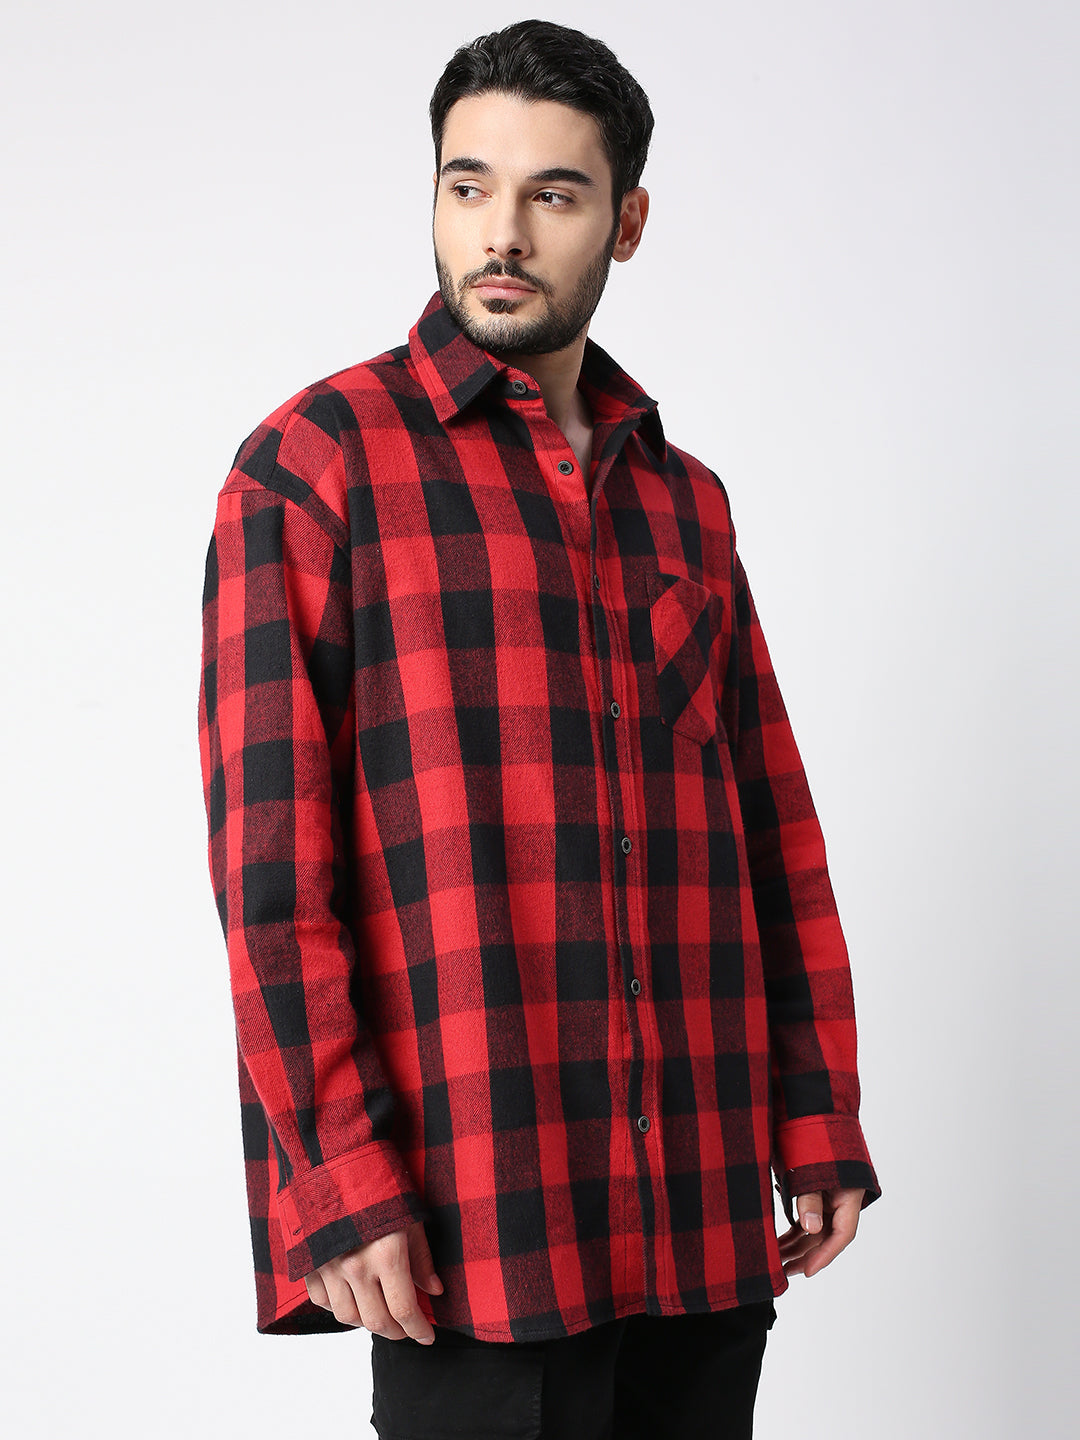 Buy Blamblack Checkered Red and Black plaid baggy shirt.